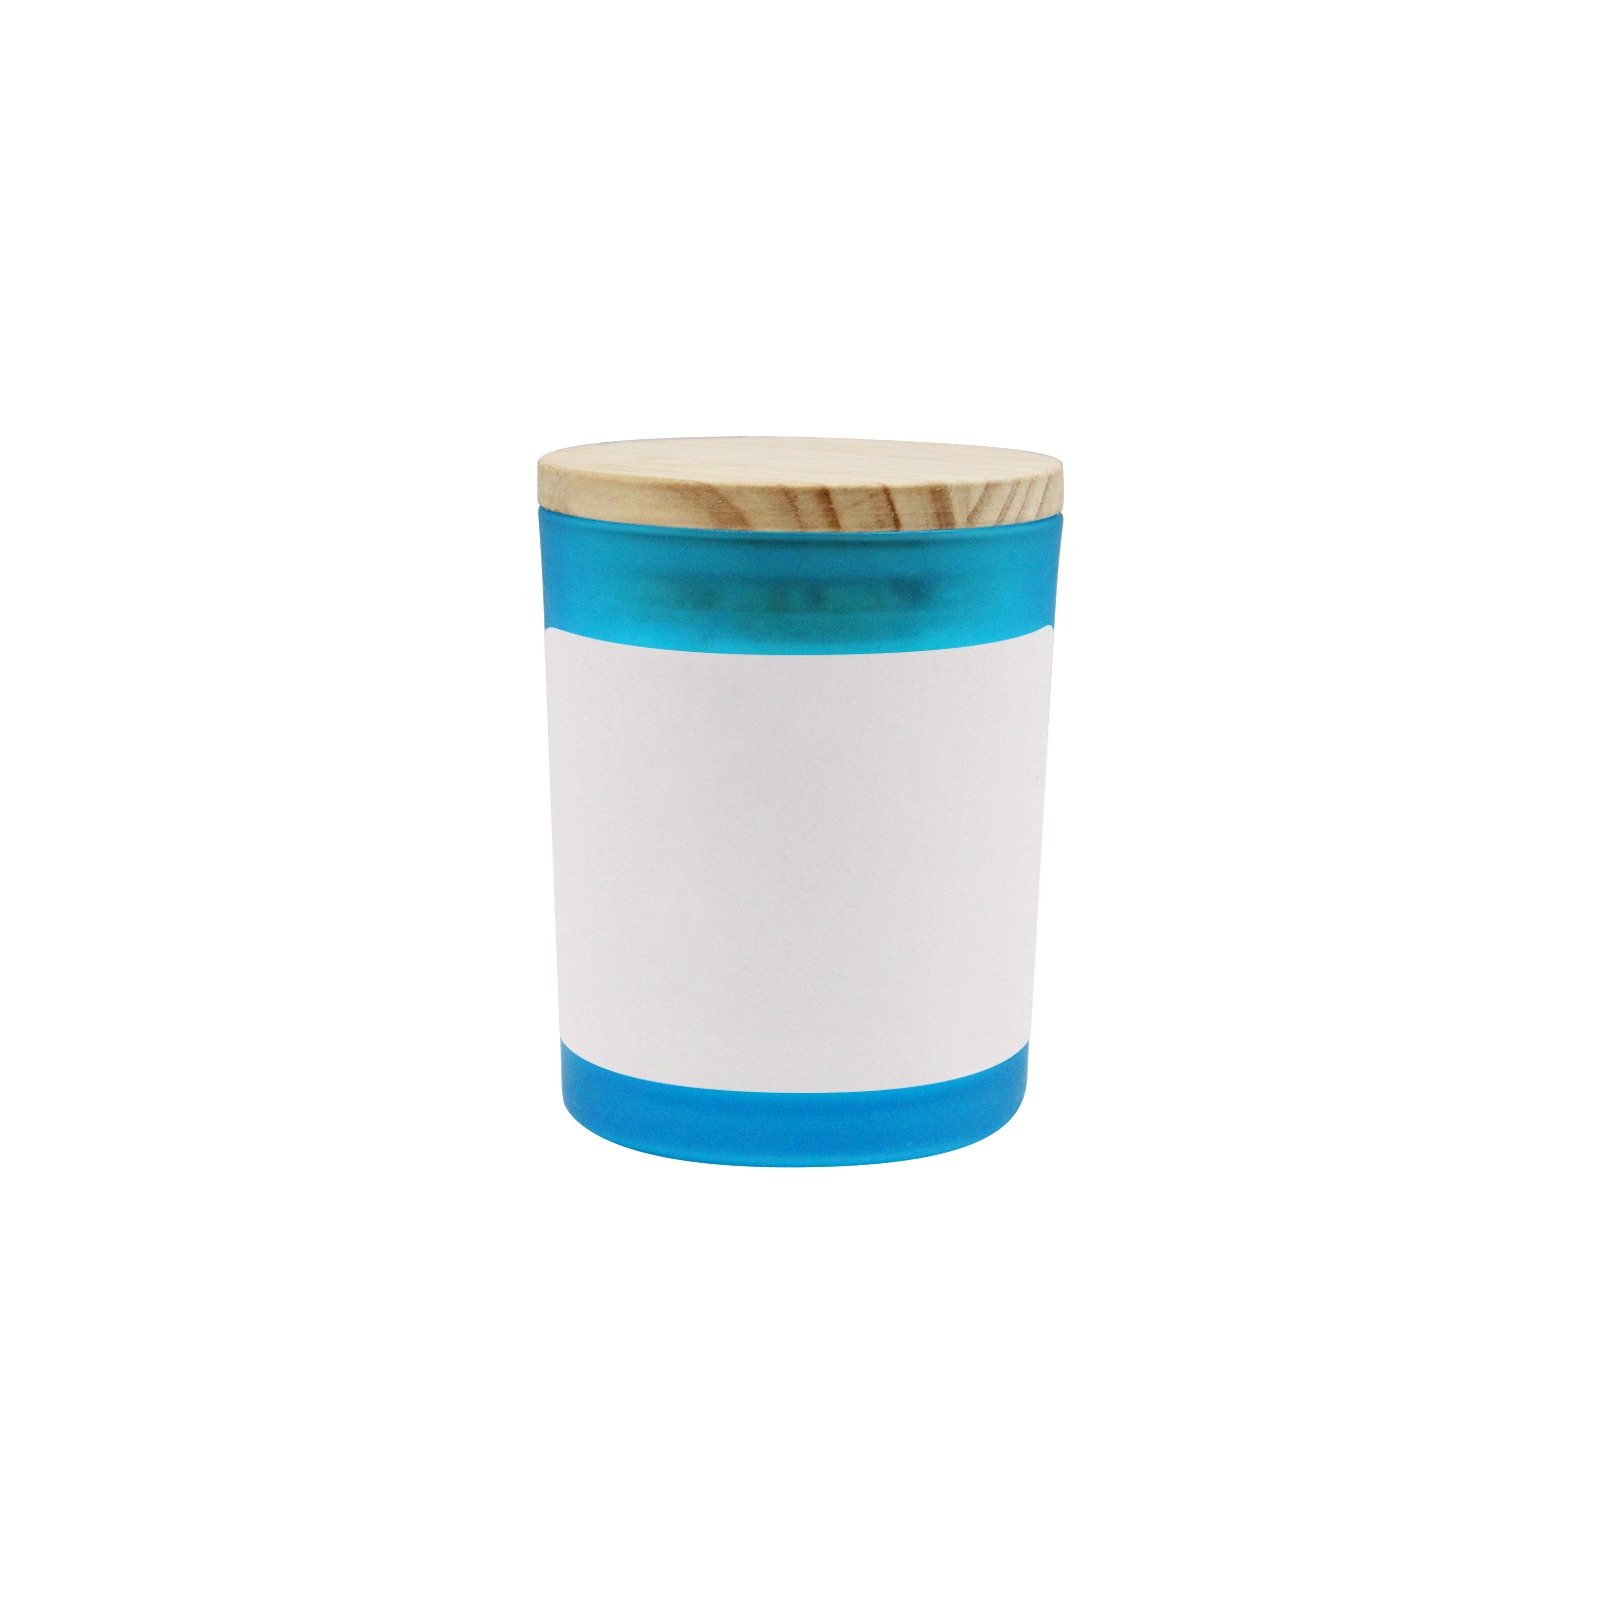 Blue Glass Candle Cup (Wood Sage & Sea Salt)